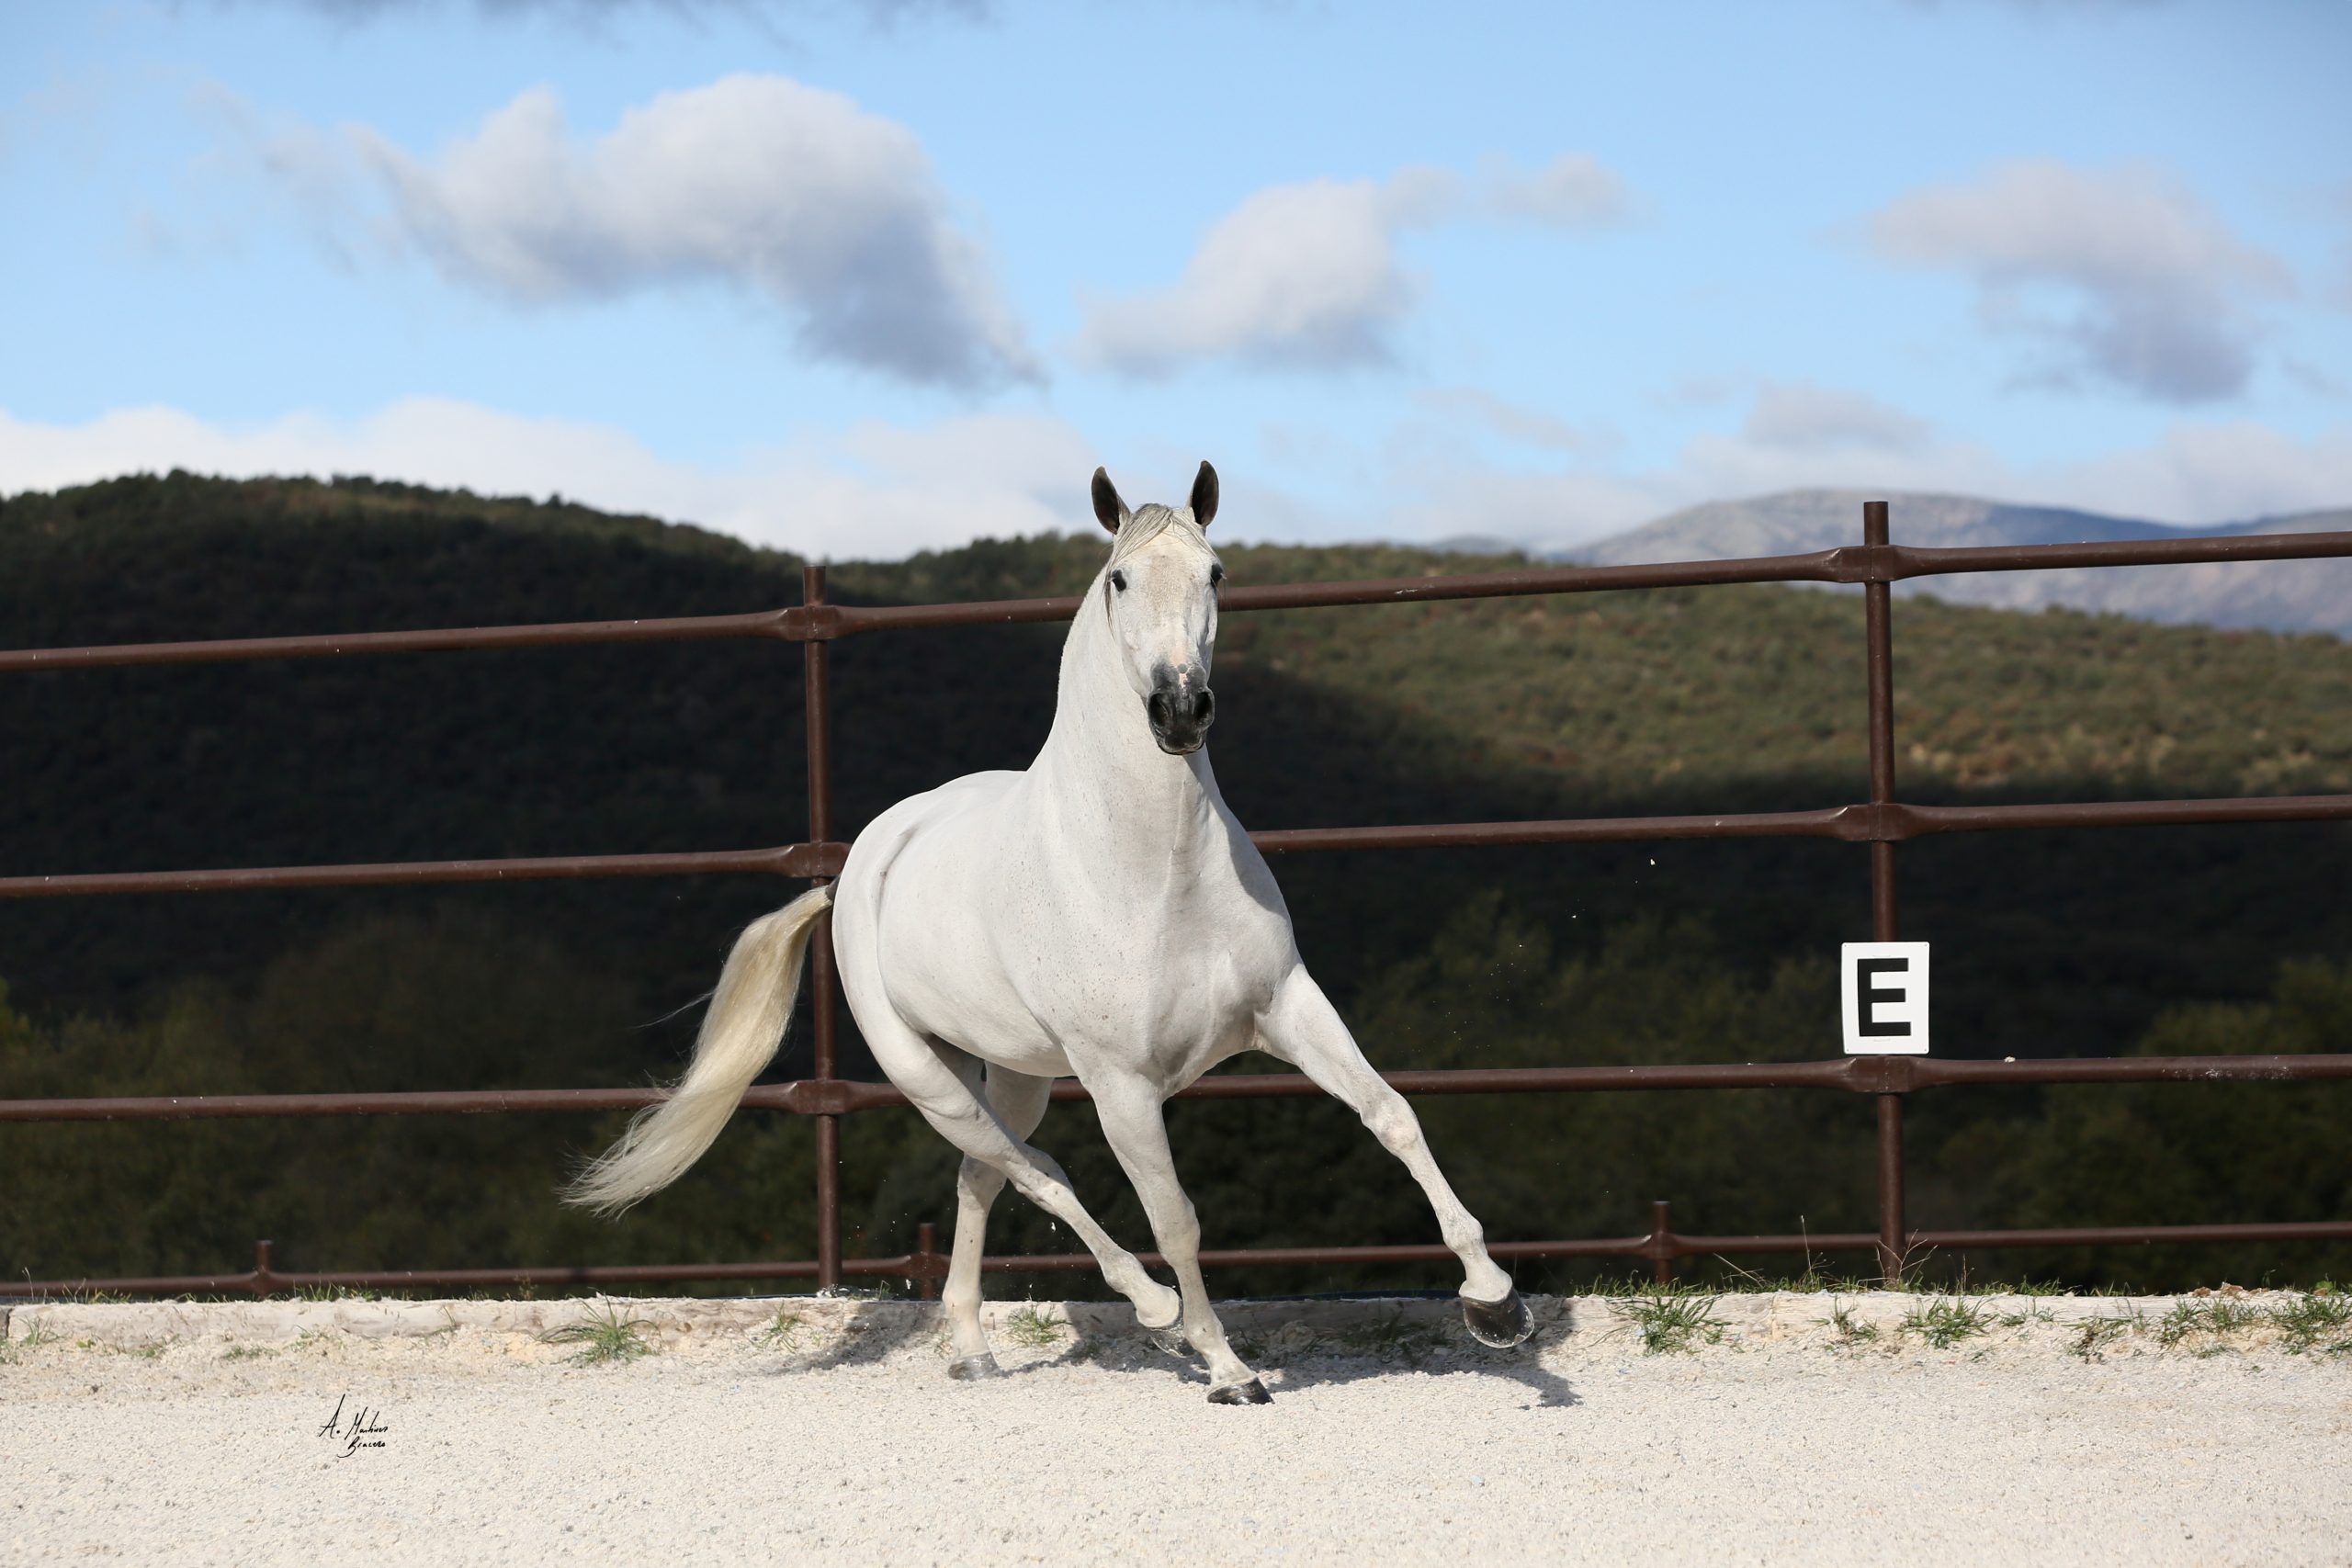 Sale of pure Spanish horses